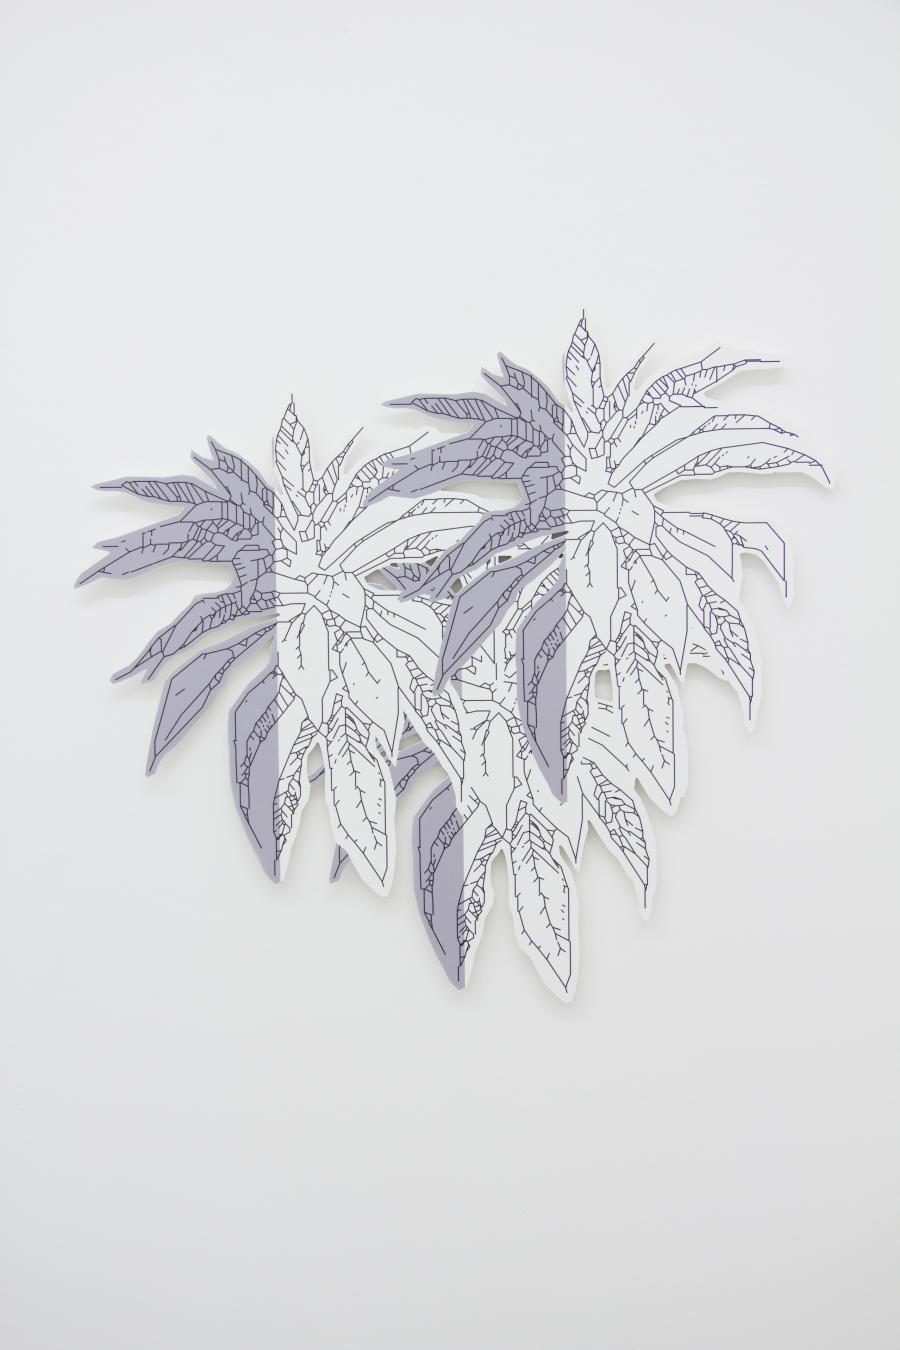 Richard Nikl, 3 Plants, UV-print on PVC, 86 x 79 cm, 2015